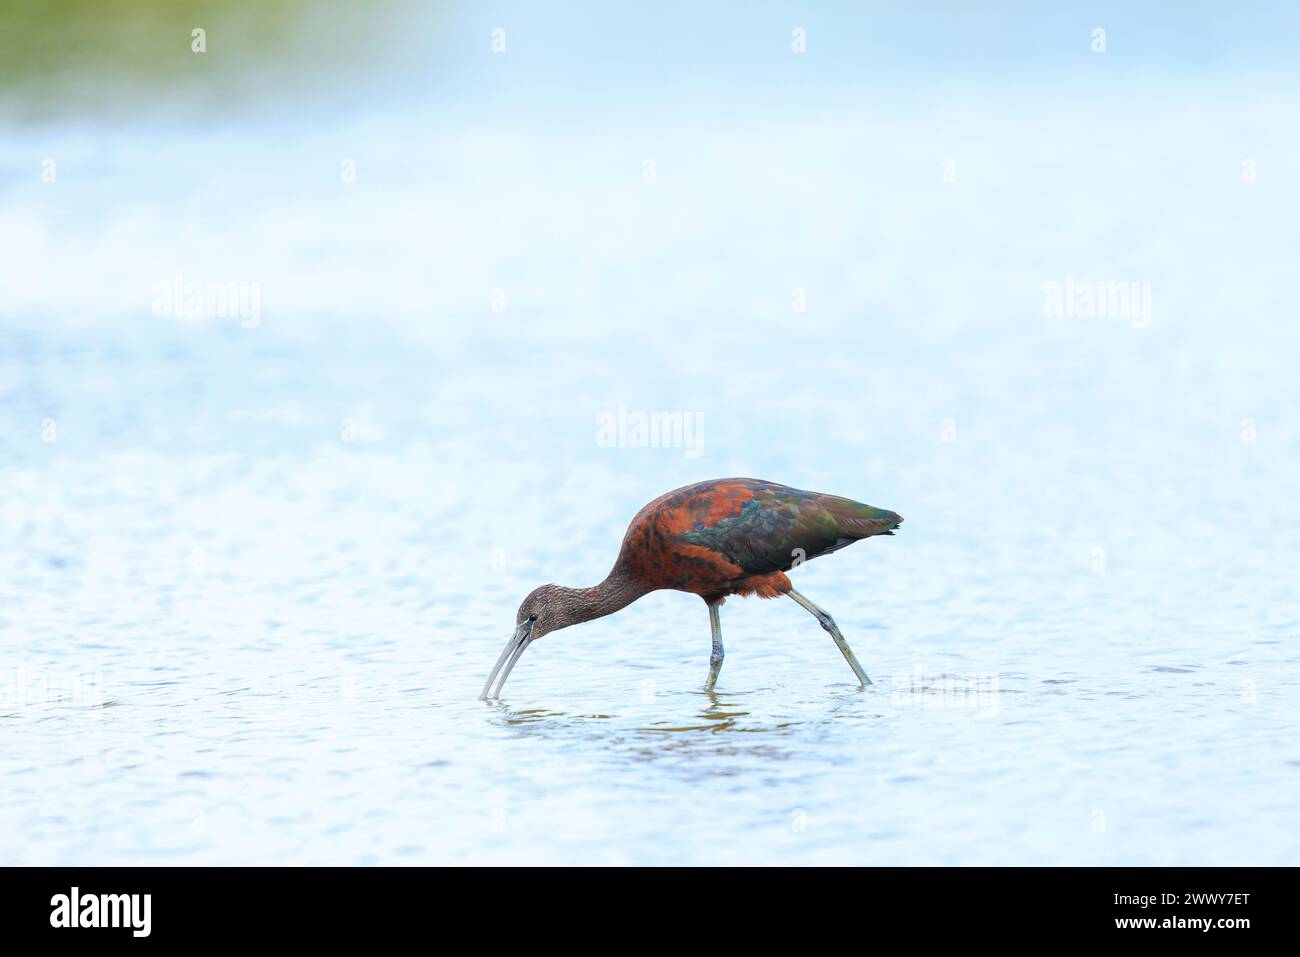 Closeup of a Glossy ibis, Plegadis falcinellus, wader bird in breeding plumage foraging in water Stock Photo